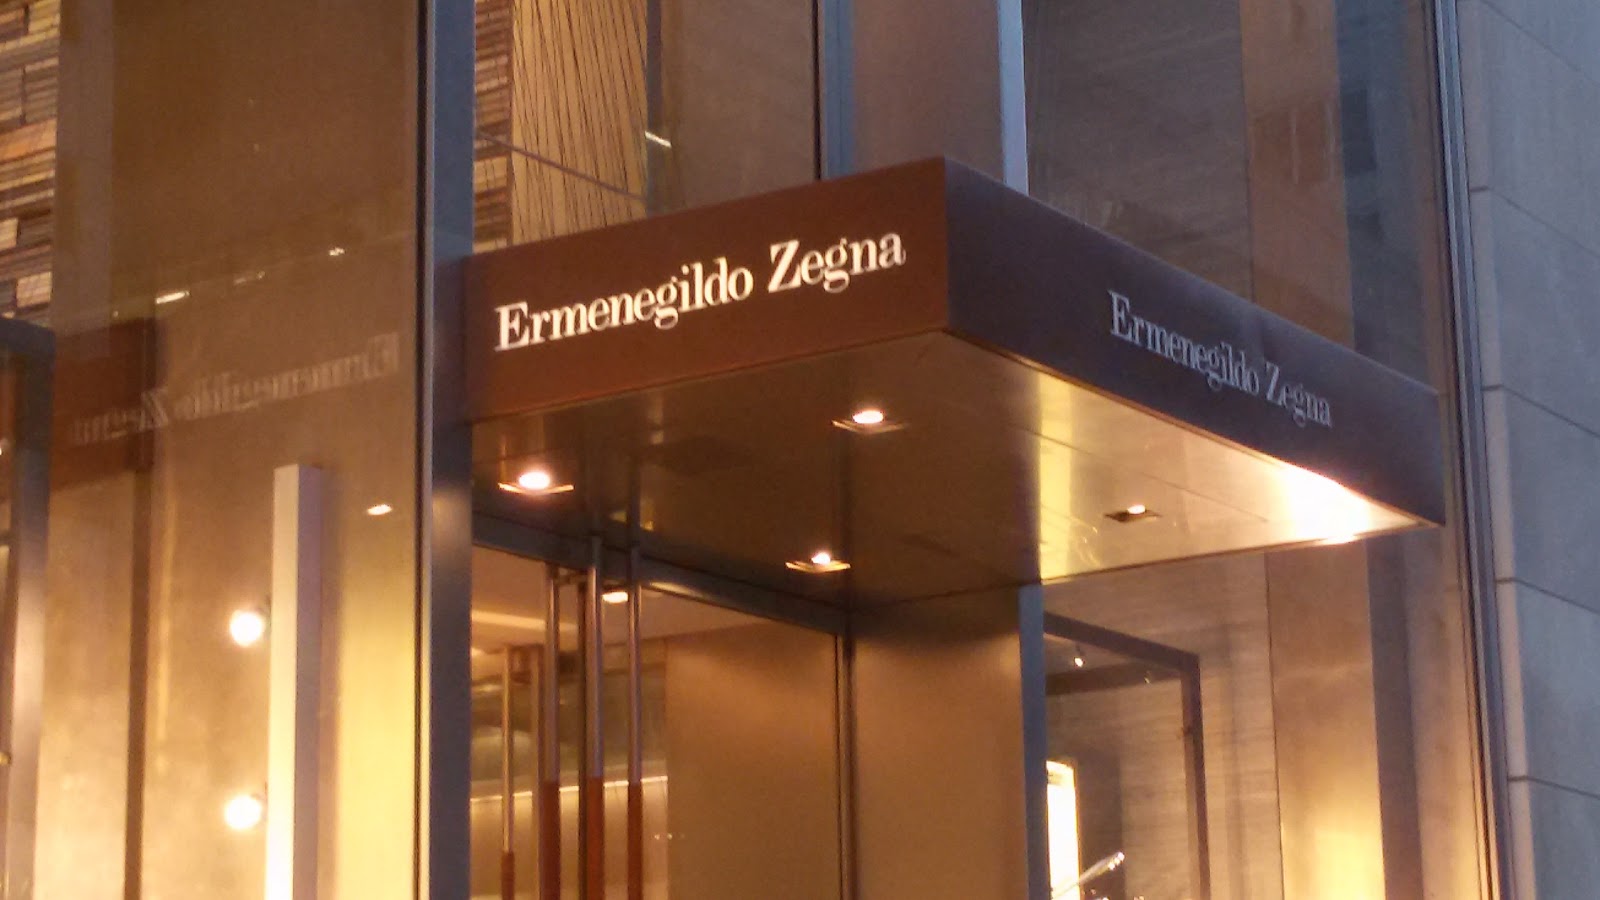 Photo of Ermenegildo Zegna in New York City, New York, United States - 2 Picture of Point of interest, Establishment, Store, Clothing store